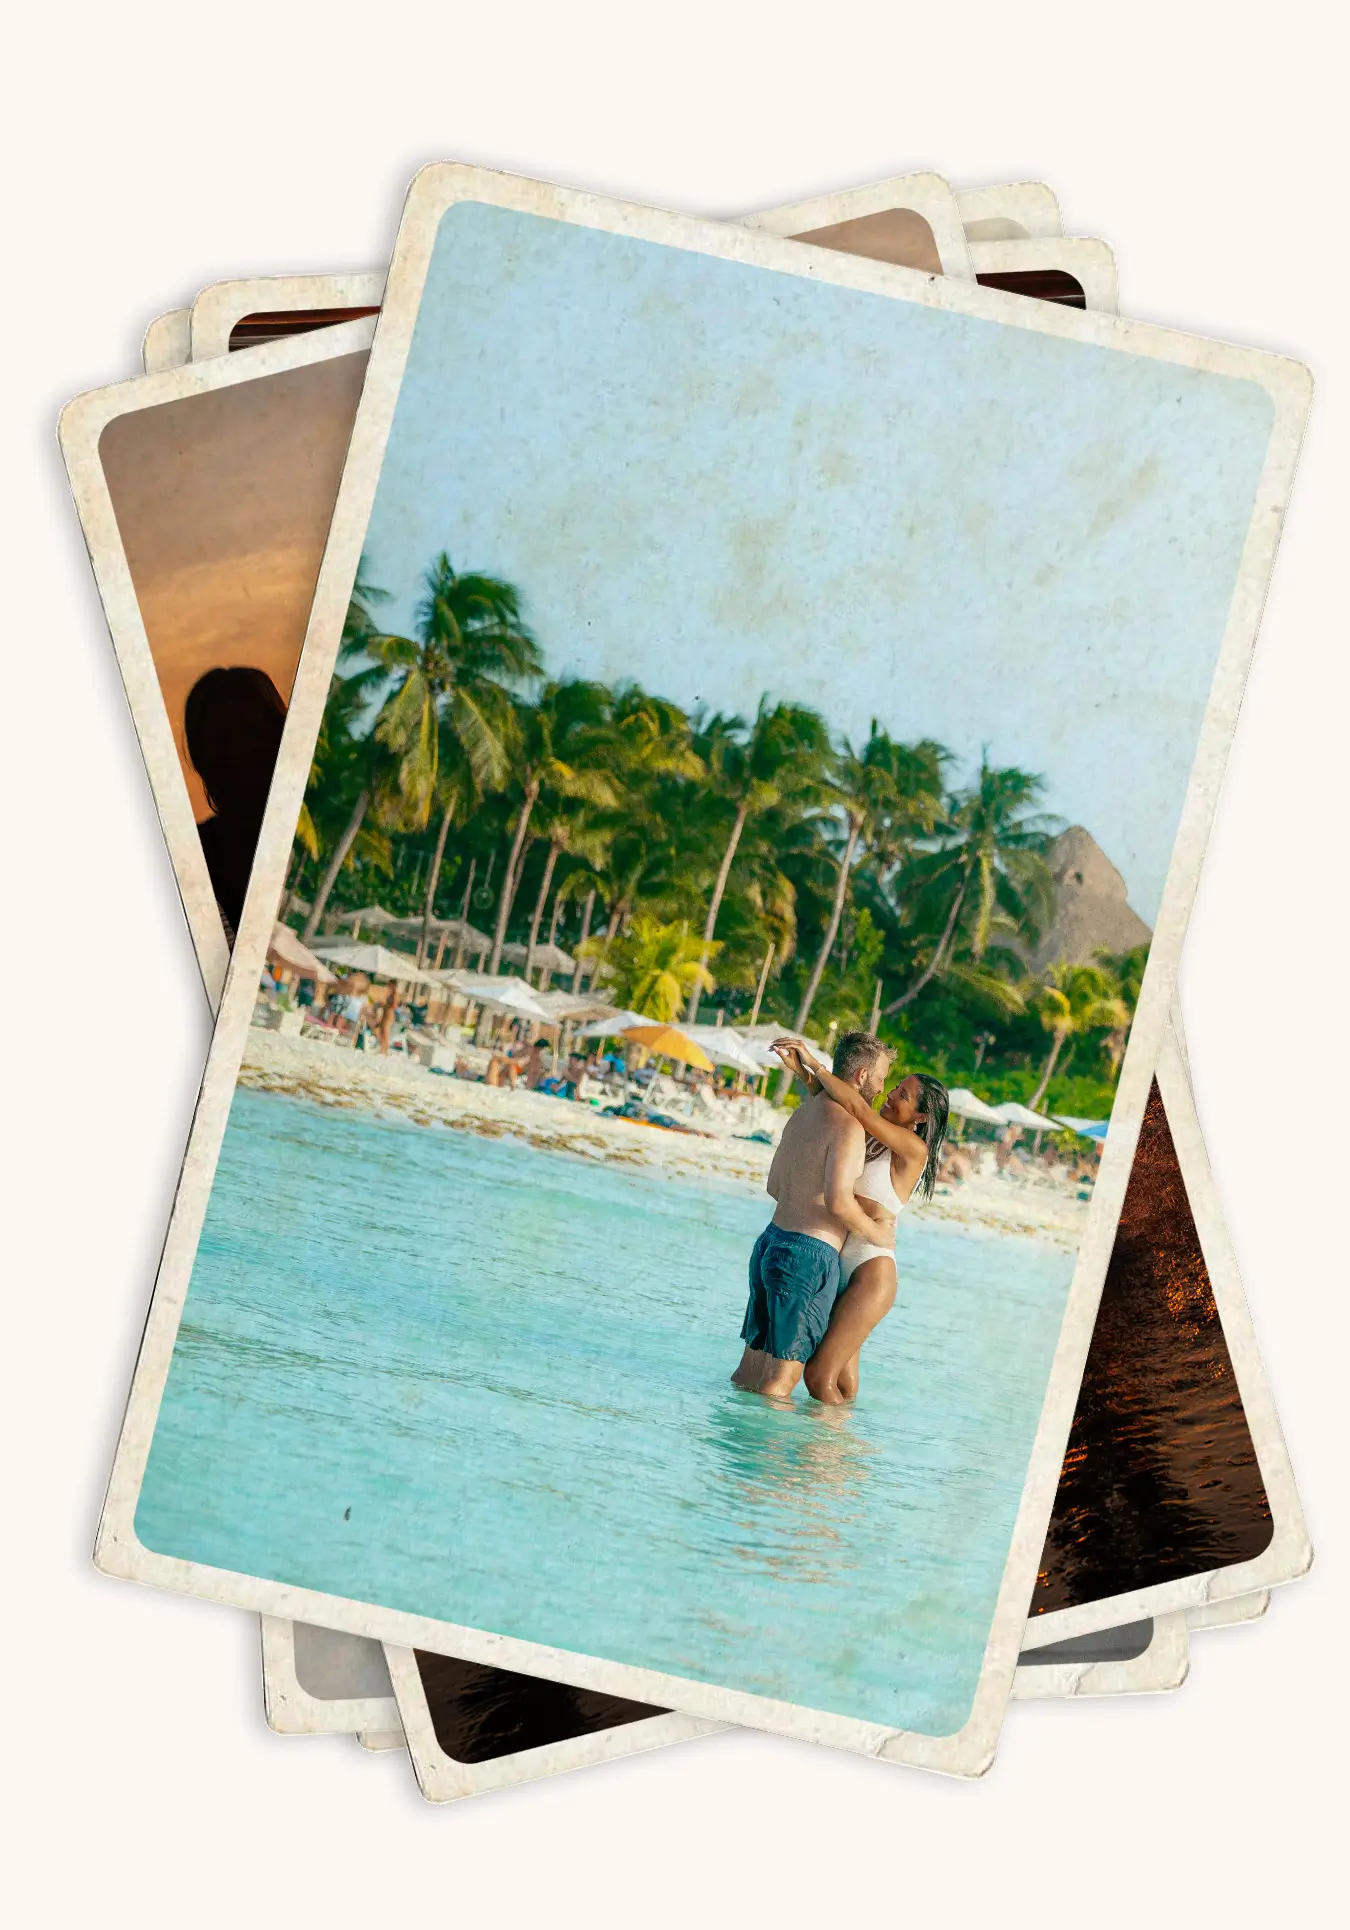 Honeymoon in Cancun